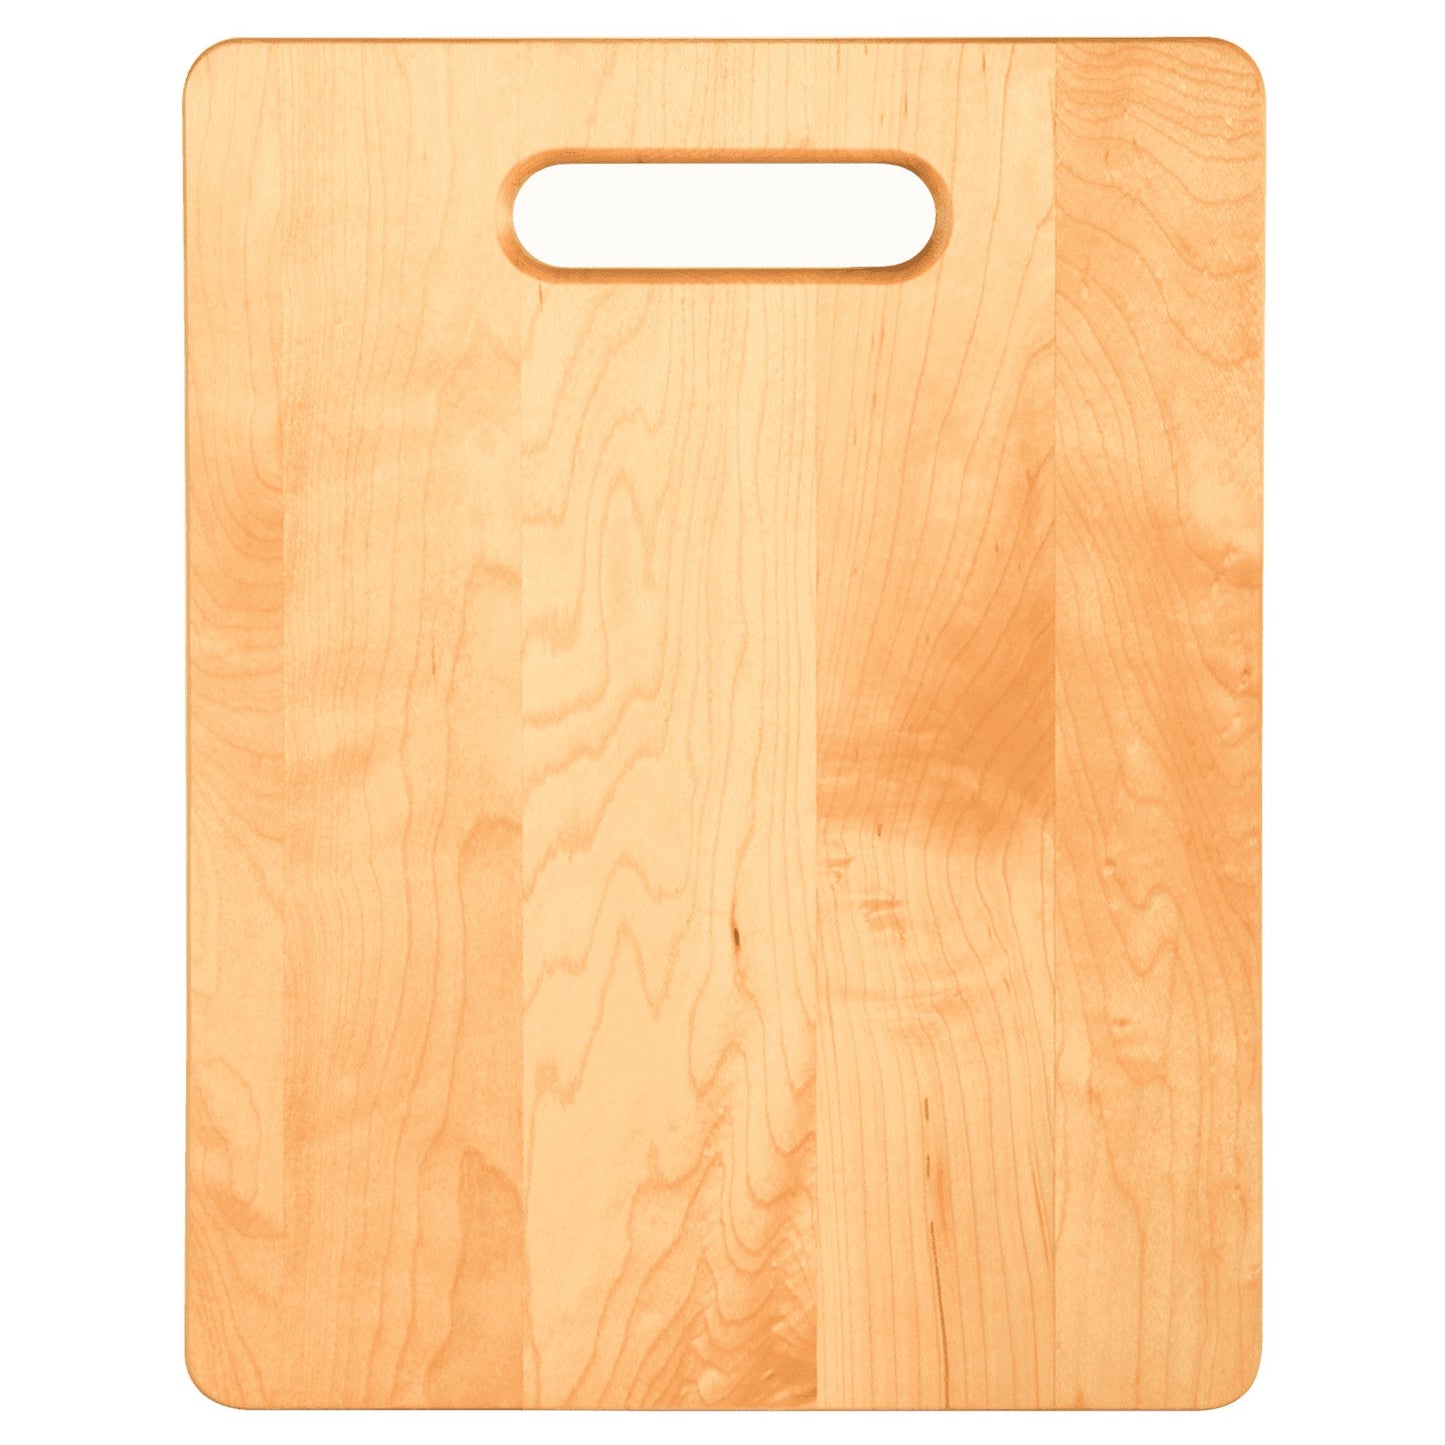 Engravable Maple Cutting Board - Legacy Creator Inc11.5 x 8.75